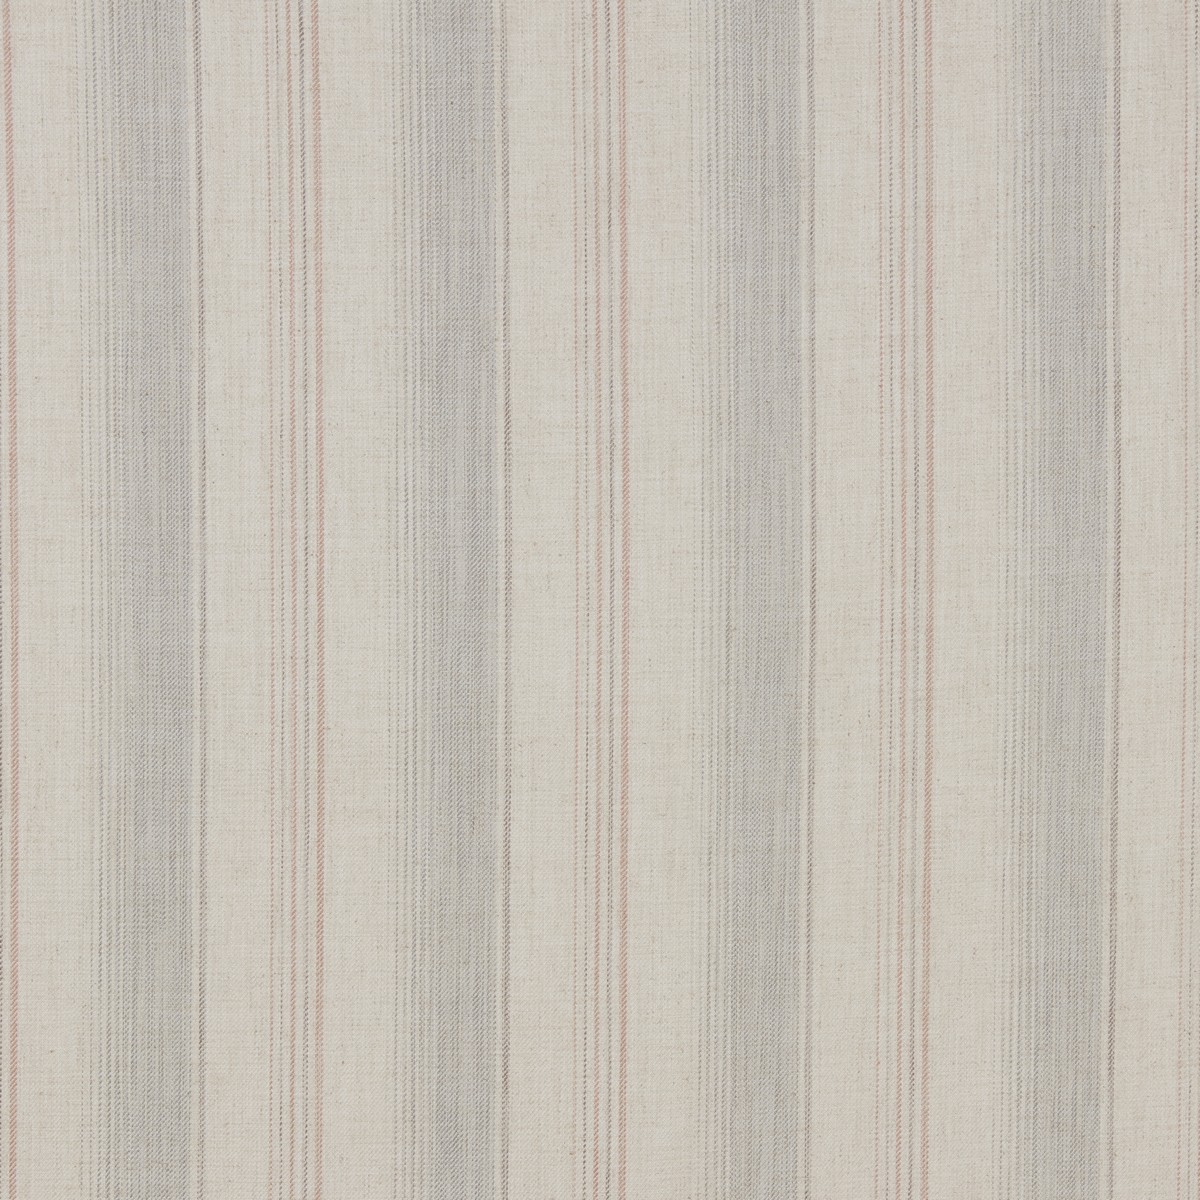 Sackville Stripe Blue Mist Fabric by iLiv